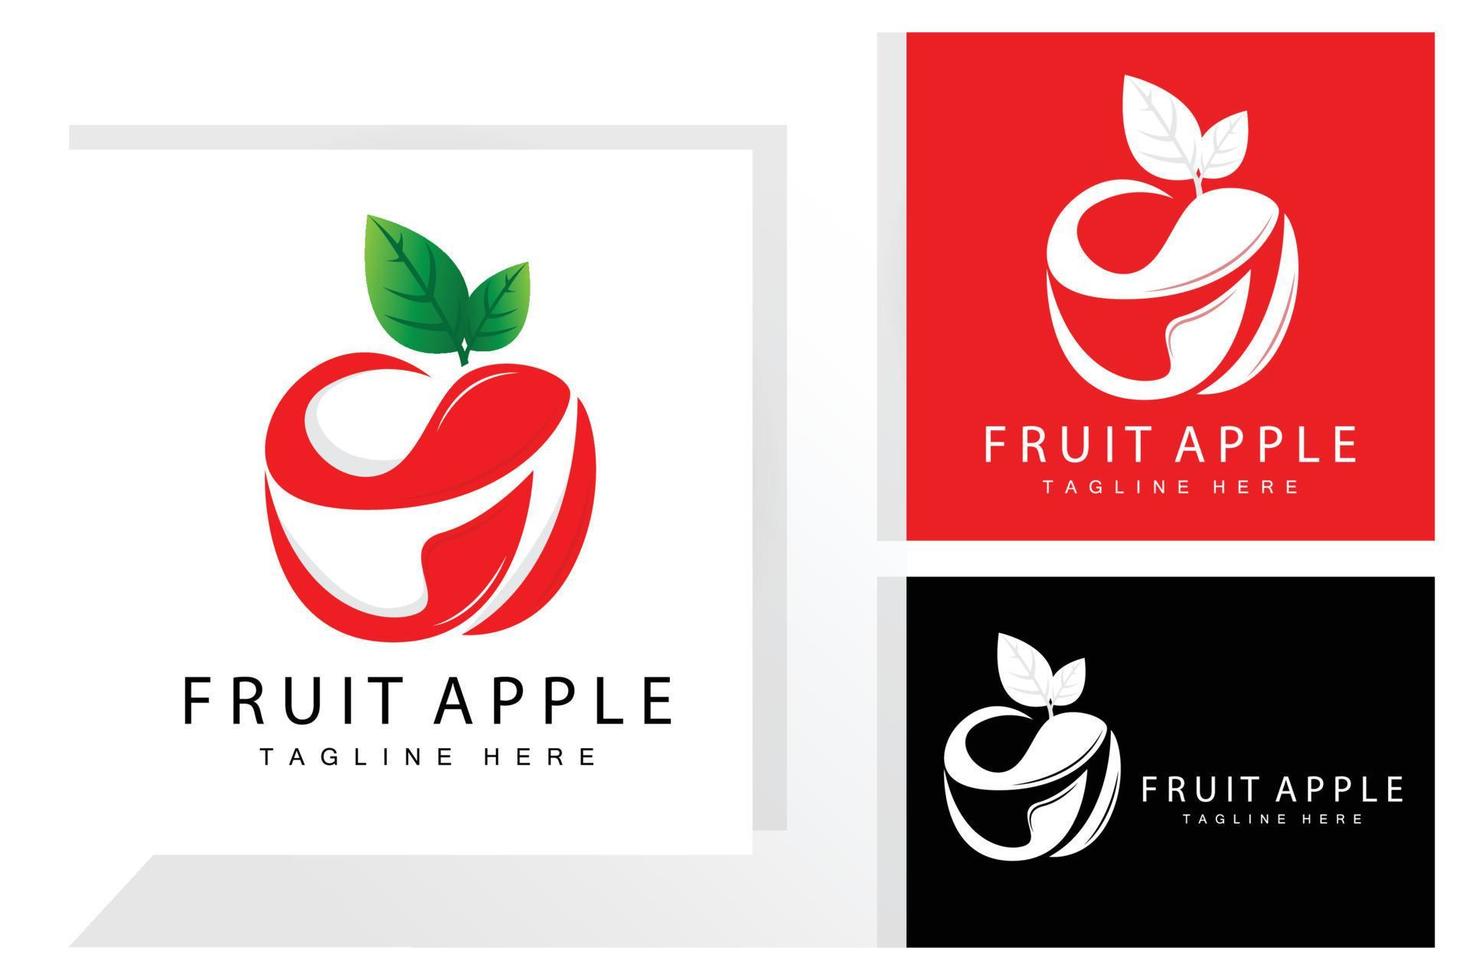 Fruchtapfel-Logodesign, roter Fruchtvektor, mit abstraktem Stil, Illustration des Produktmarkenetiketts vektor